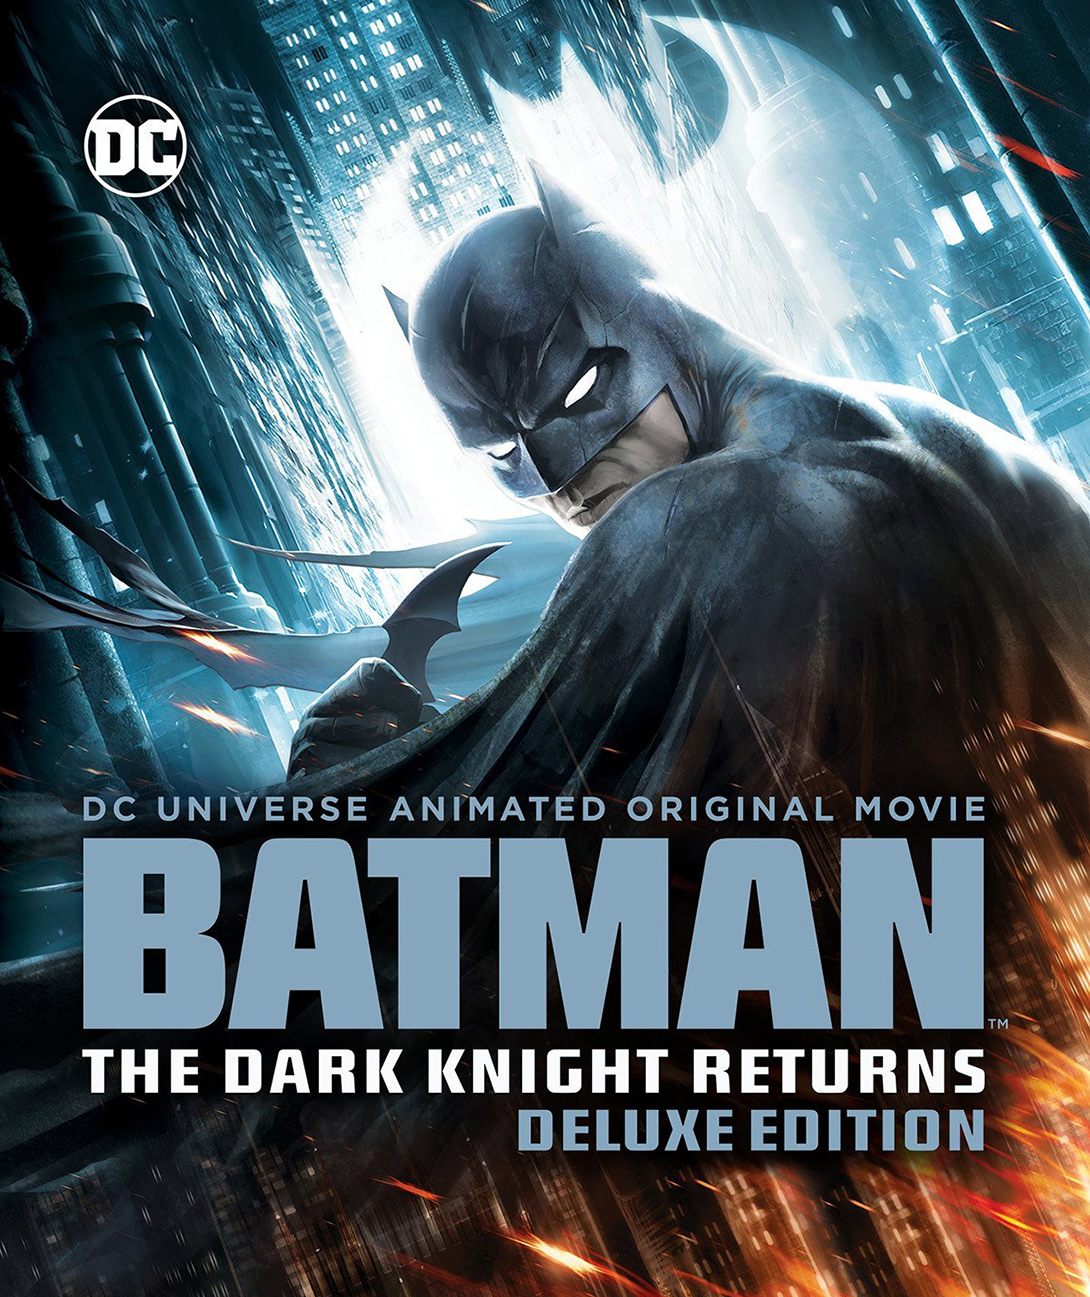 The Dark Knight Returns - DC Comics News